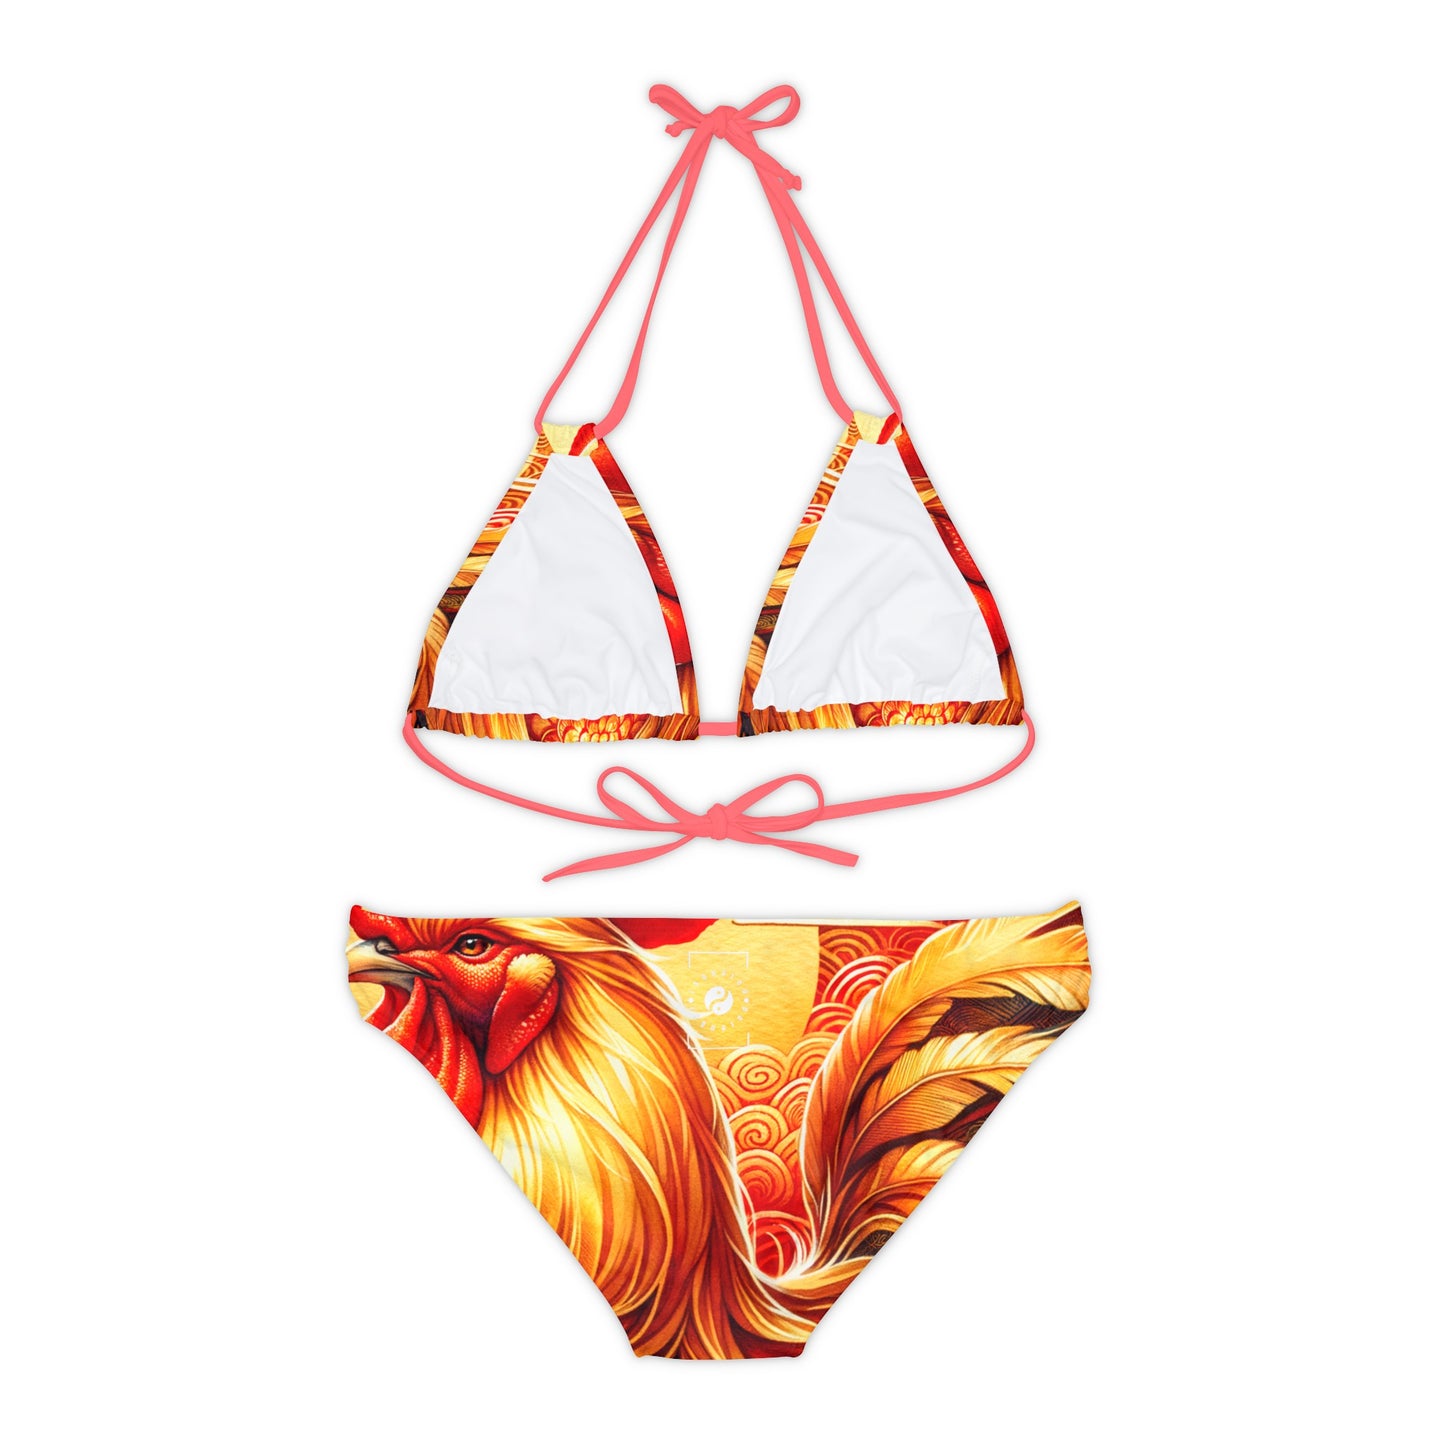 "Crimson Dawn: The Golden Rooster's Rebirth" - Lace-up Bikini Set